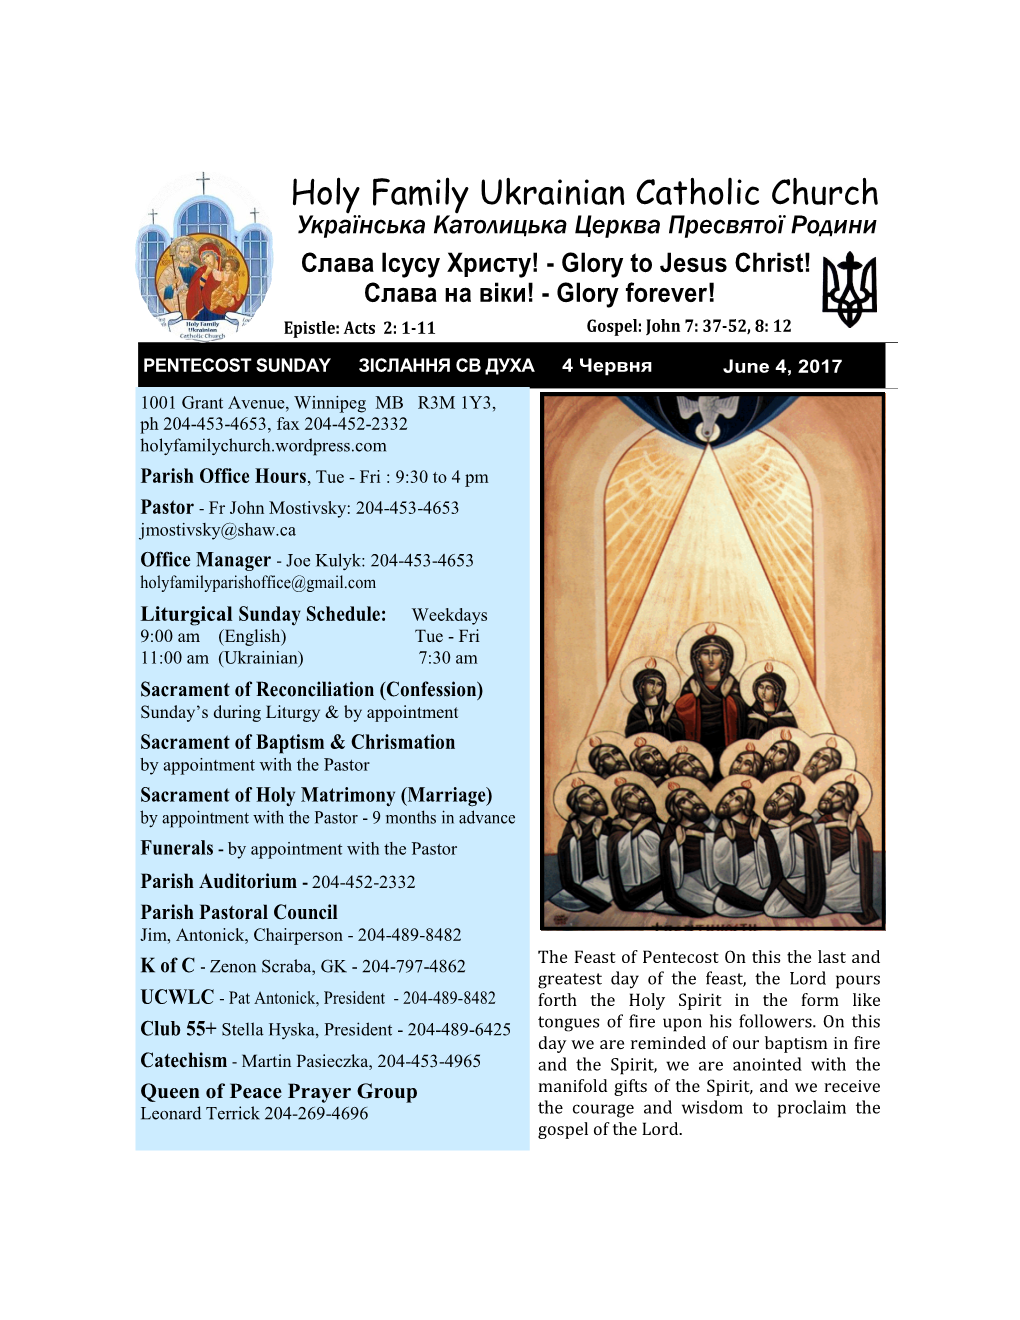 Holy Family Parish PRAZNYK